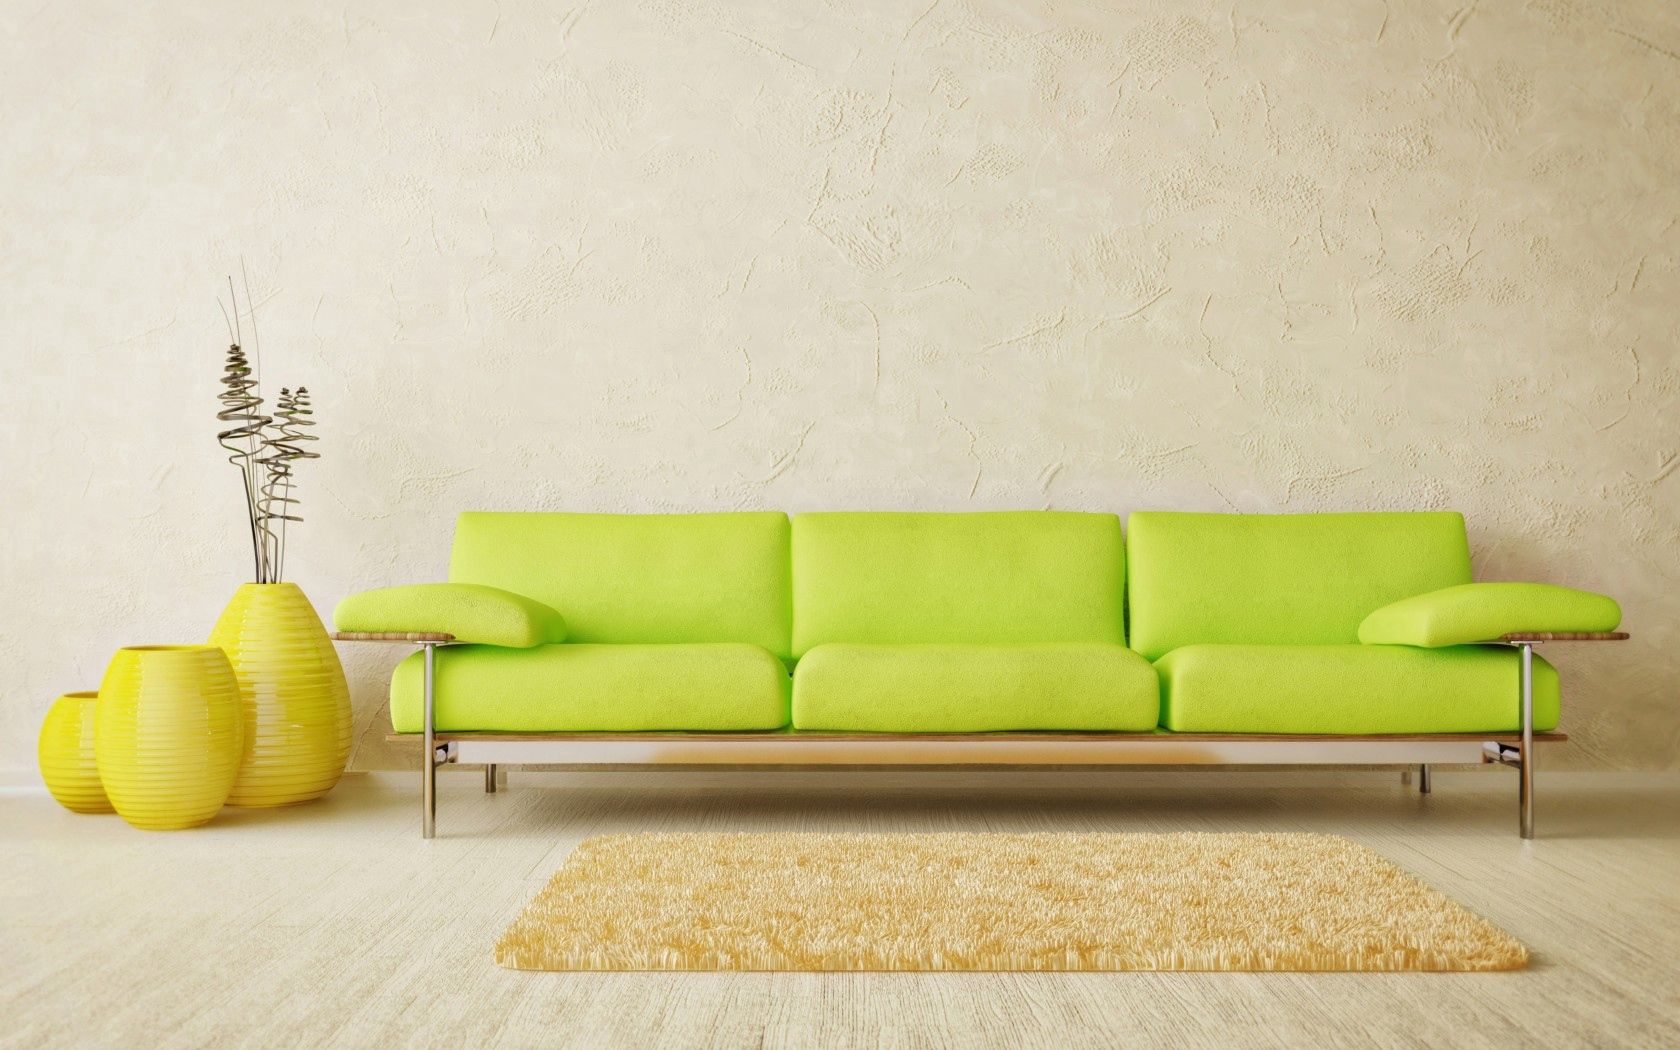 light, minimalism, interior, yellow, green, miscellanea, miscellaneous, light coloured, design, room, style, sofa, mat, vases, parquet, rug